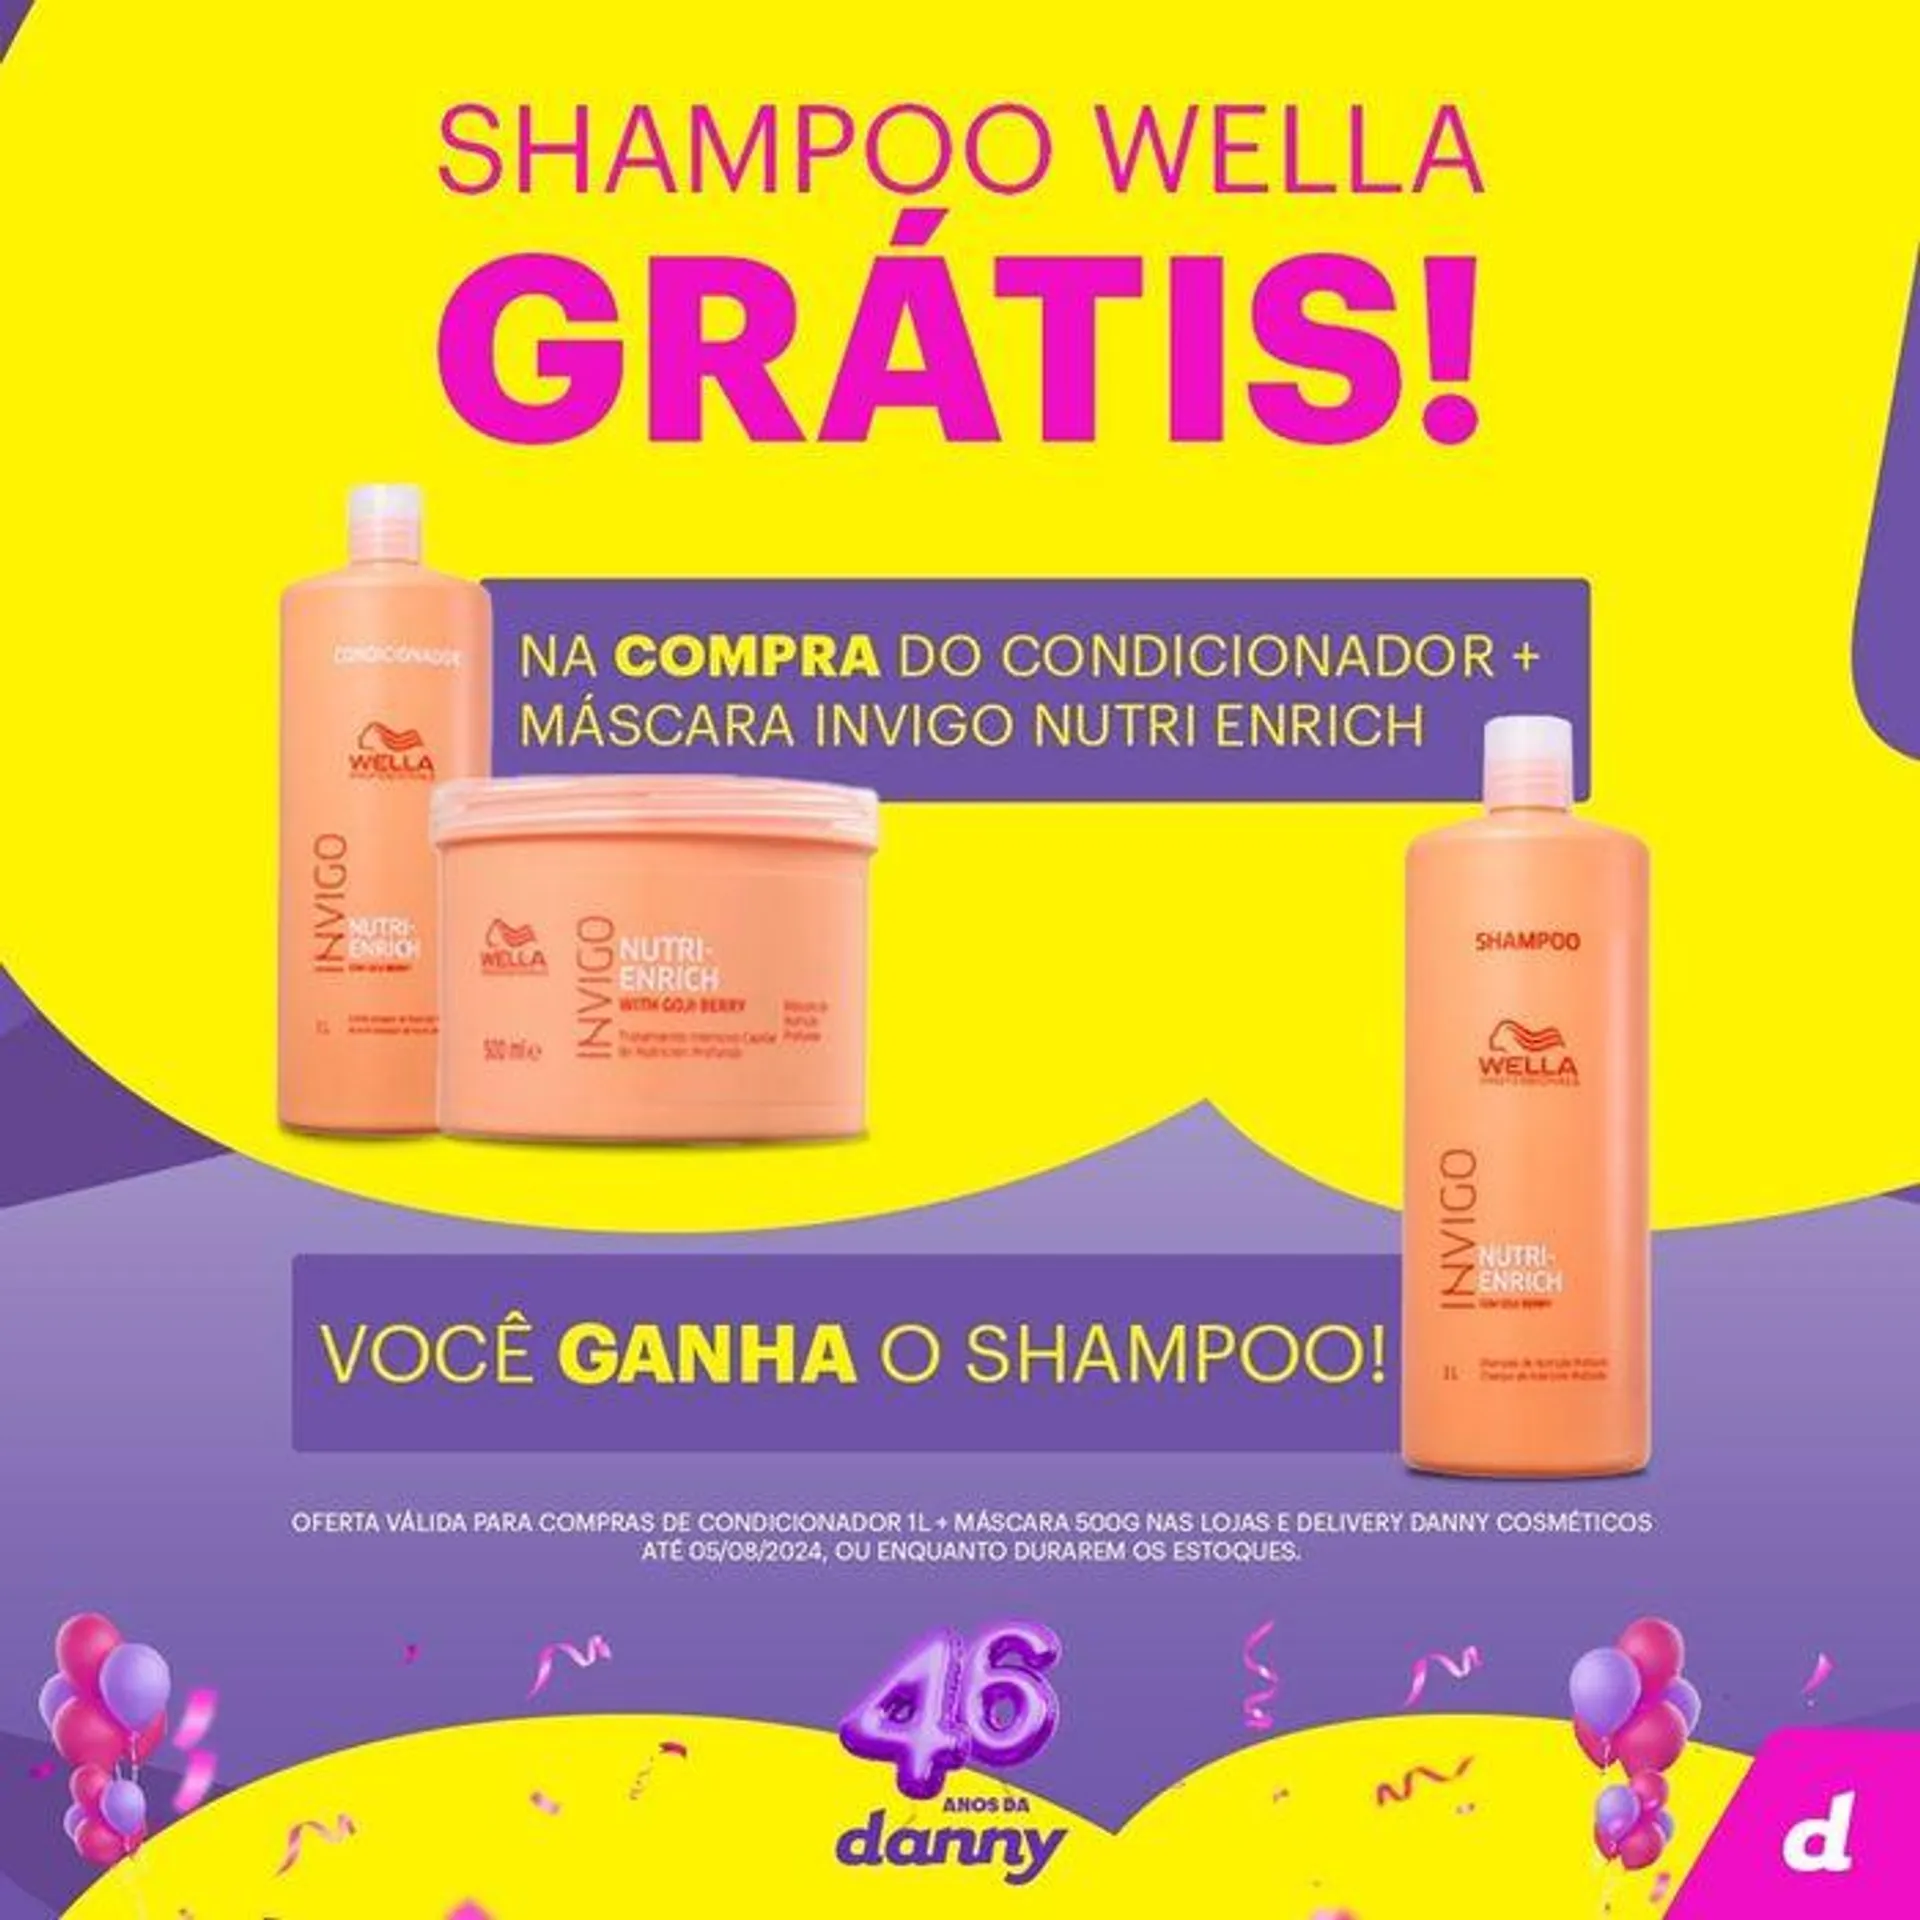 Shampoo Wella Gratis! - 1